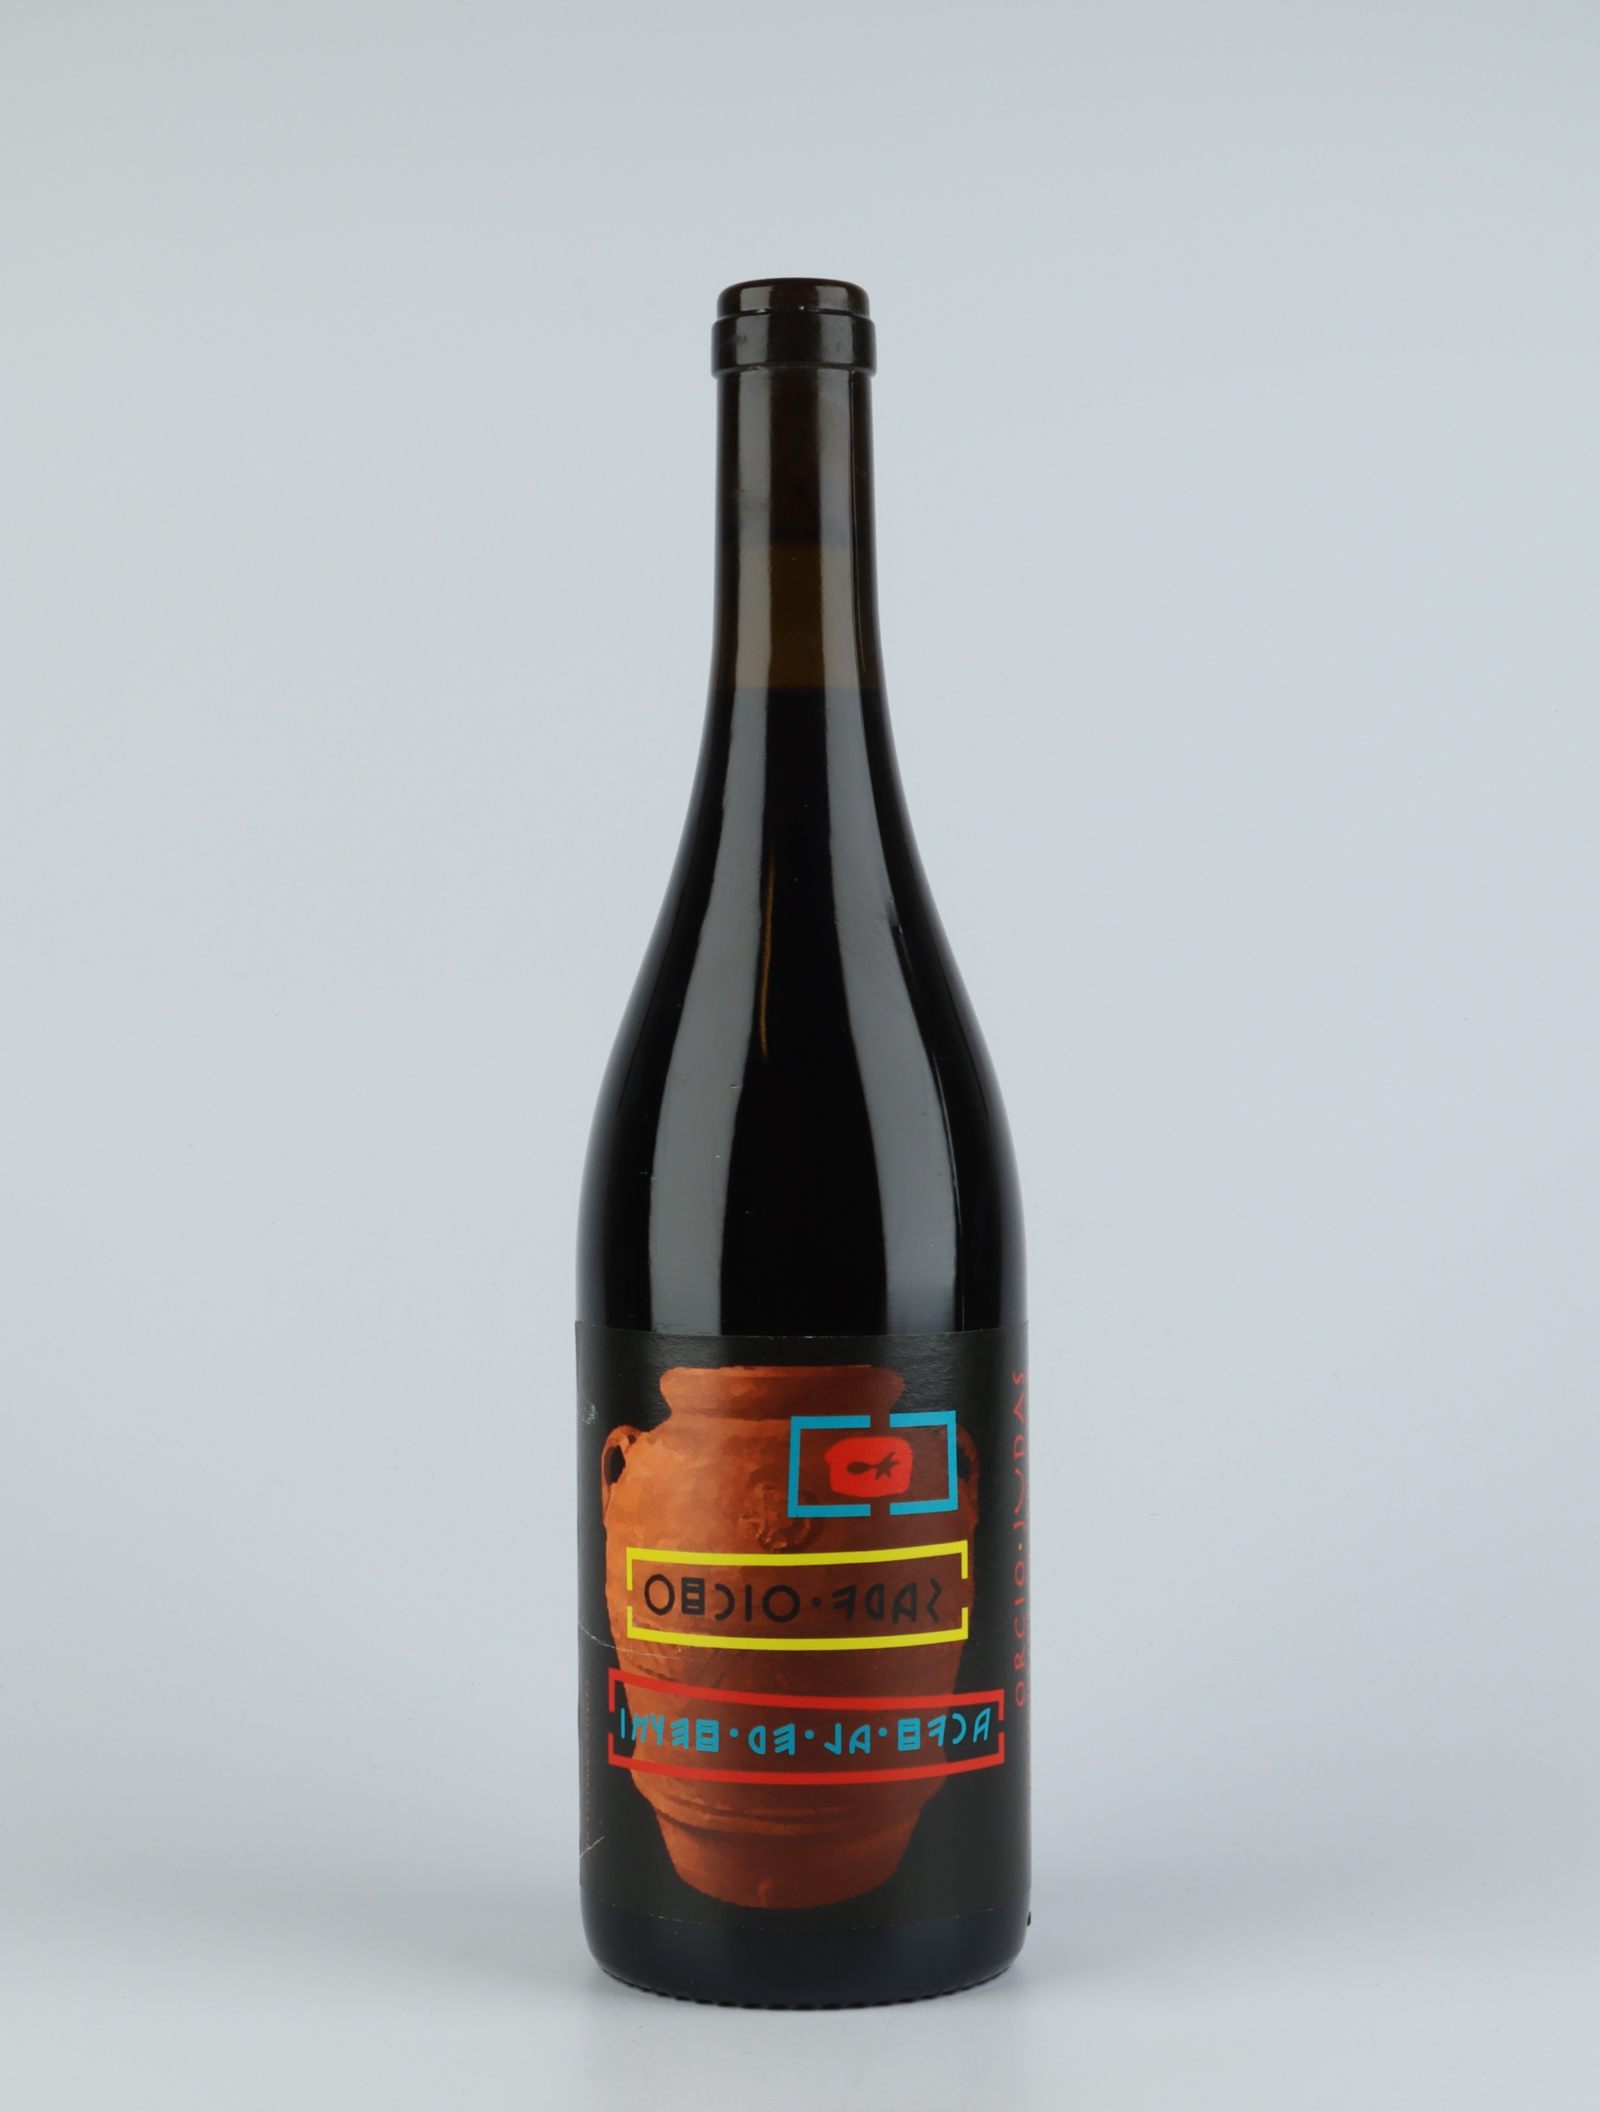 A bottle 2019 Orcio Judas Red wine from Vinyer de la Ruca, Rousillon in France